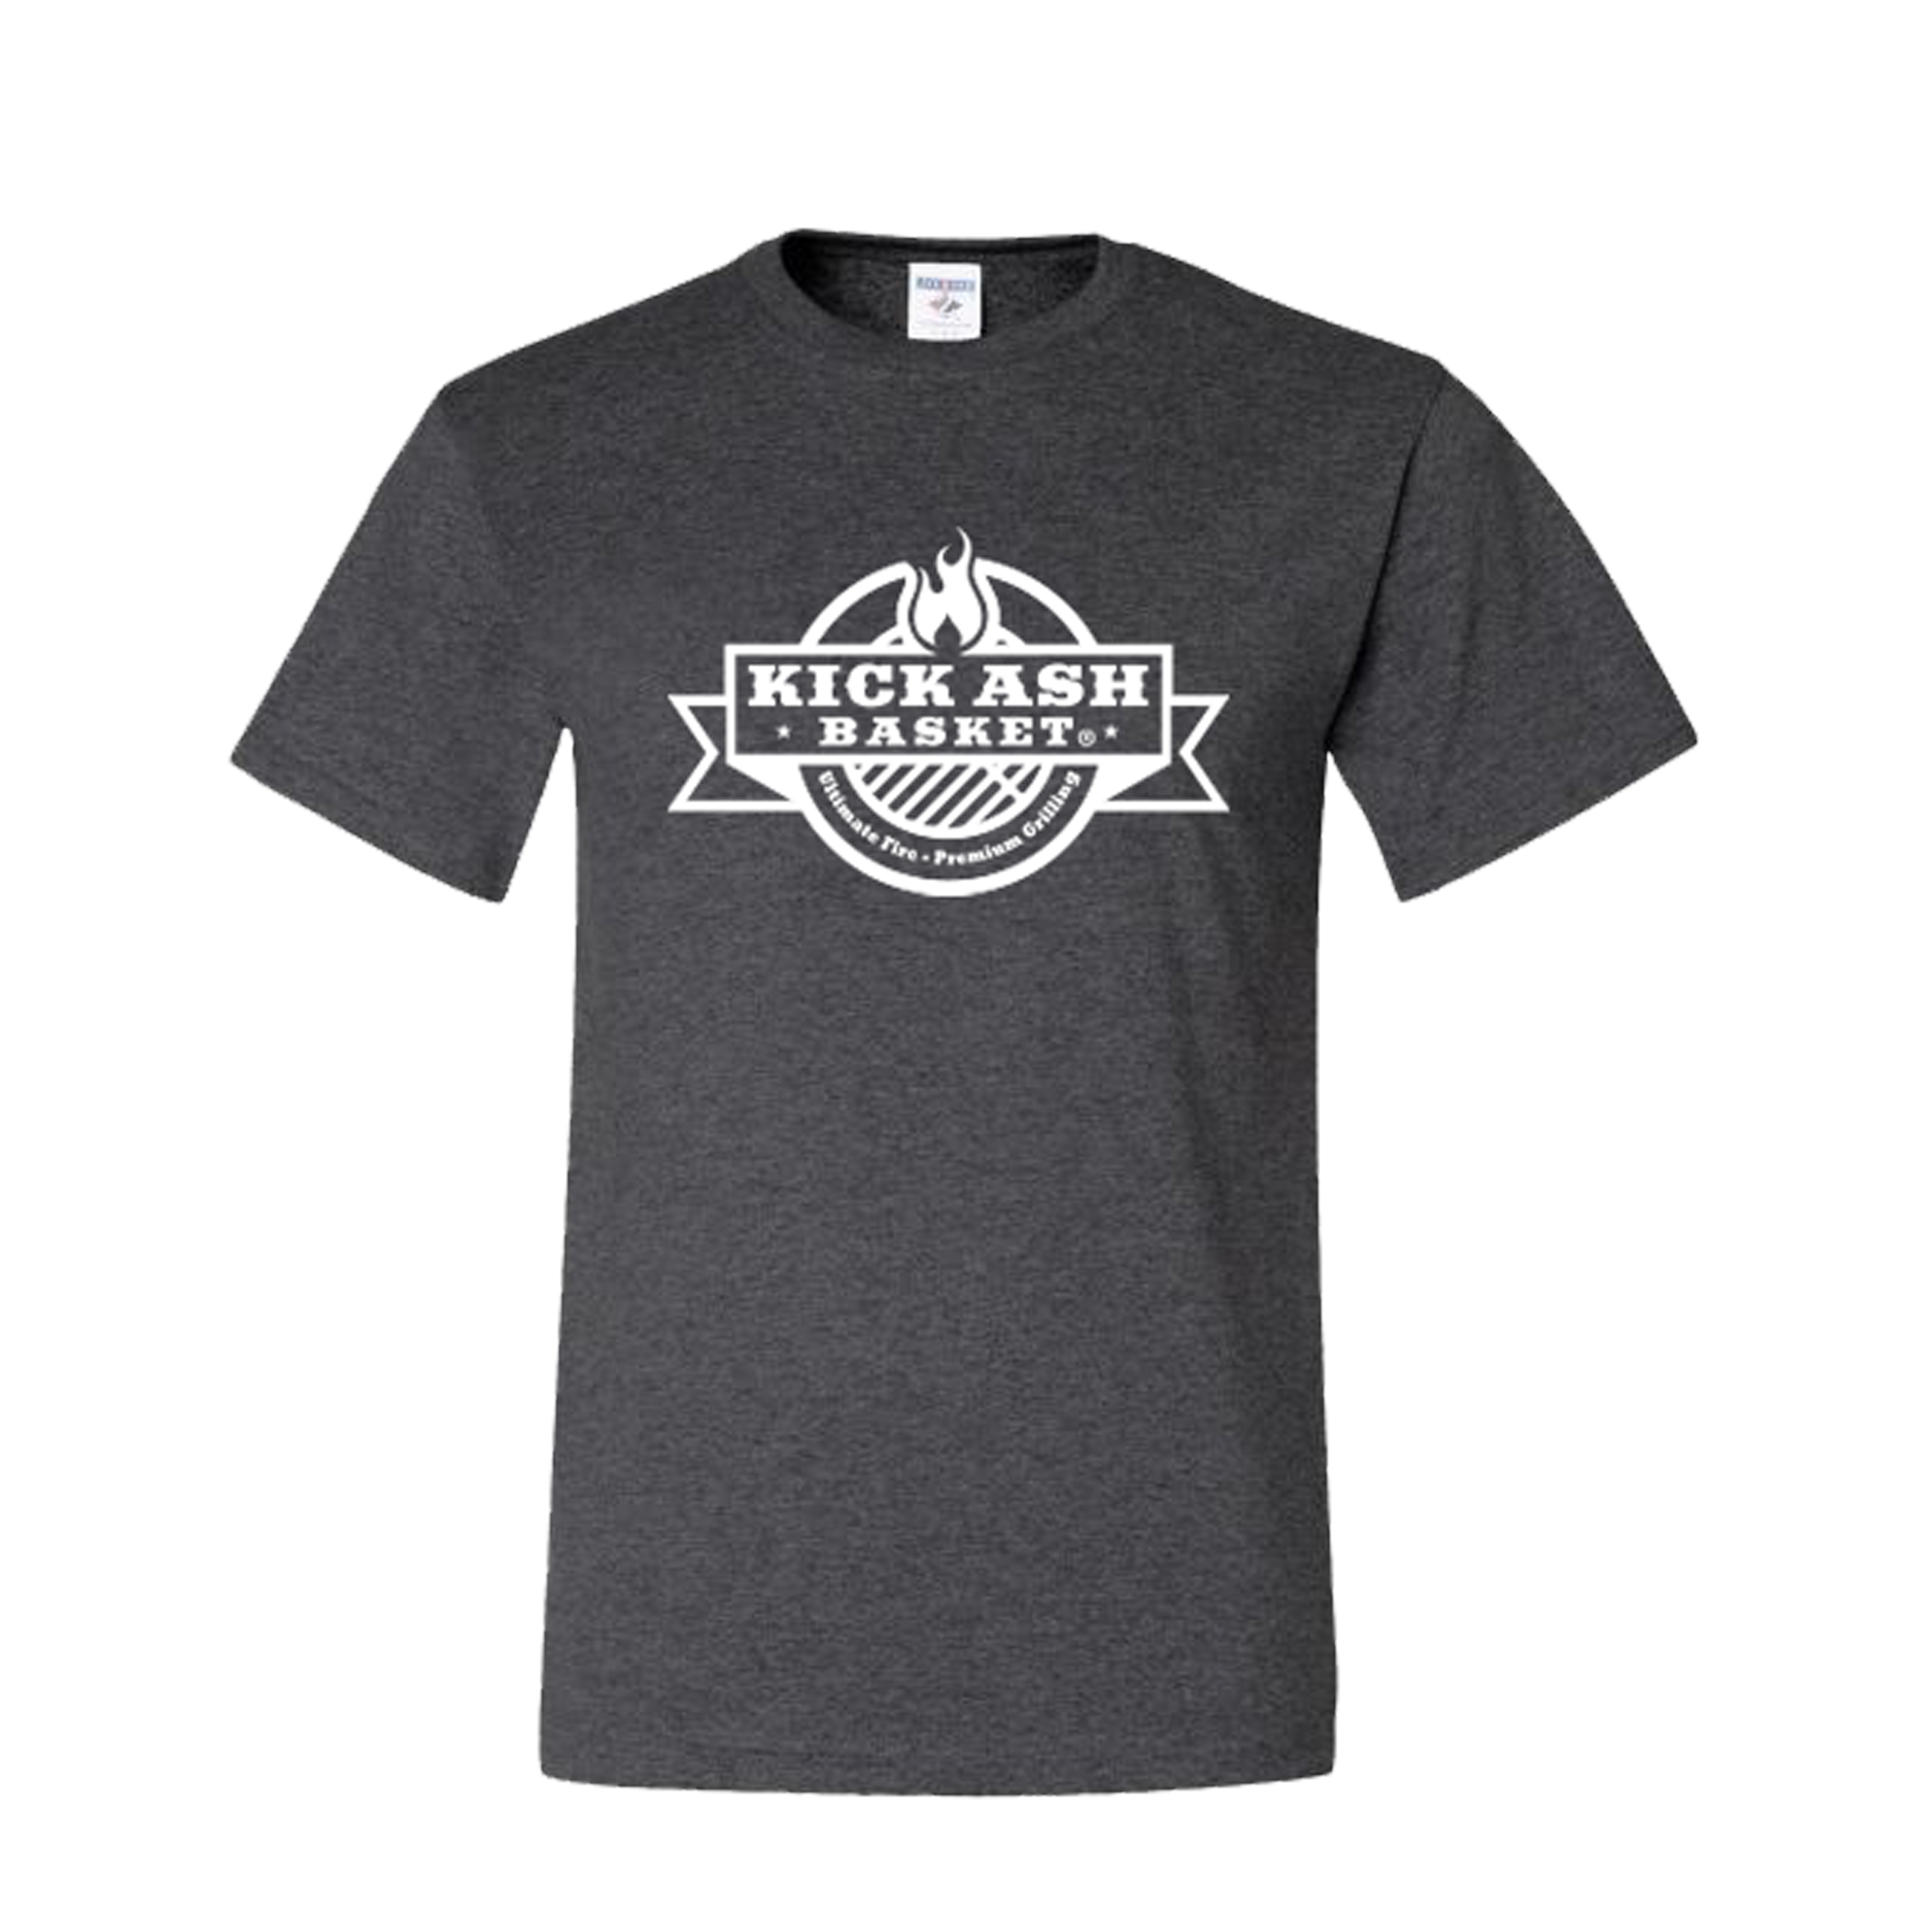 Kick Ash T-Shirt - Charcoal